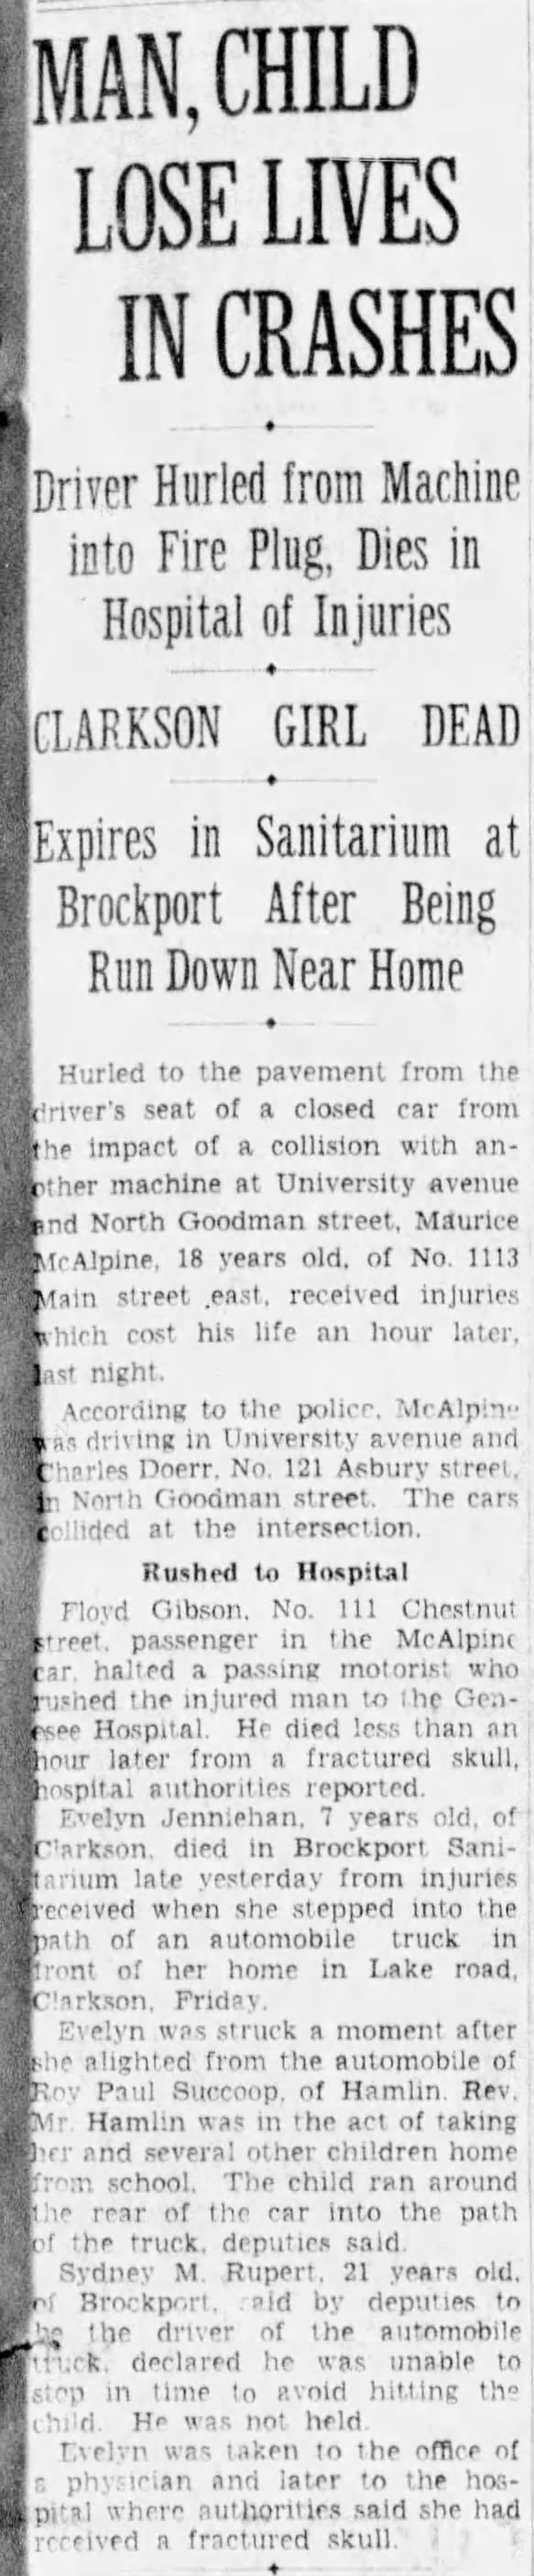 MCALPINE, Maurice Loses Life in Crash 1928